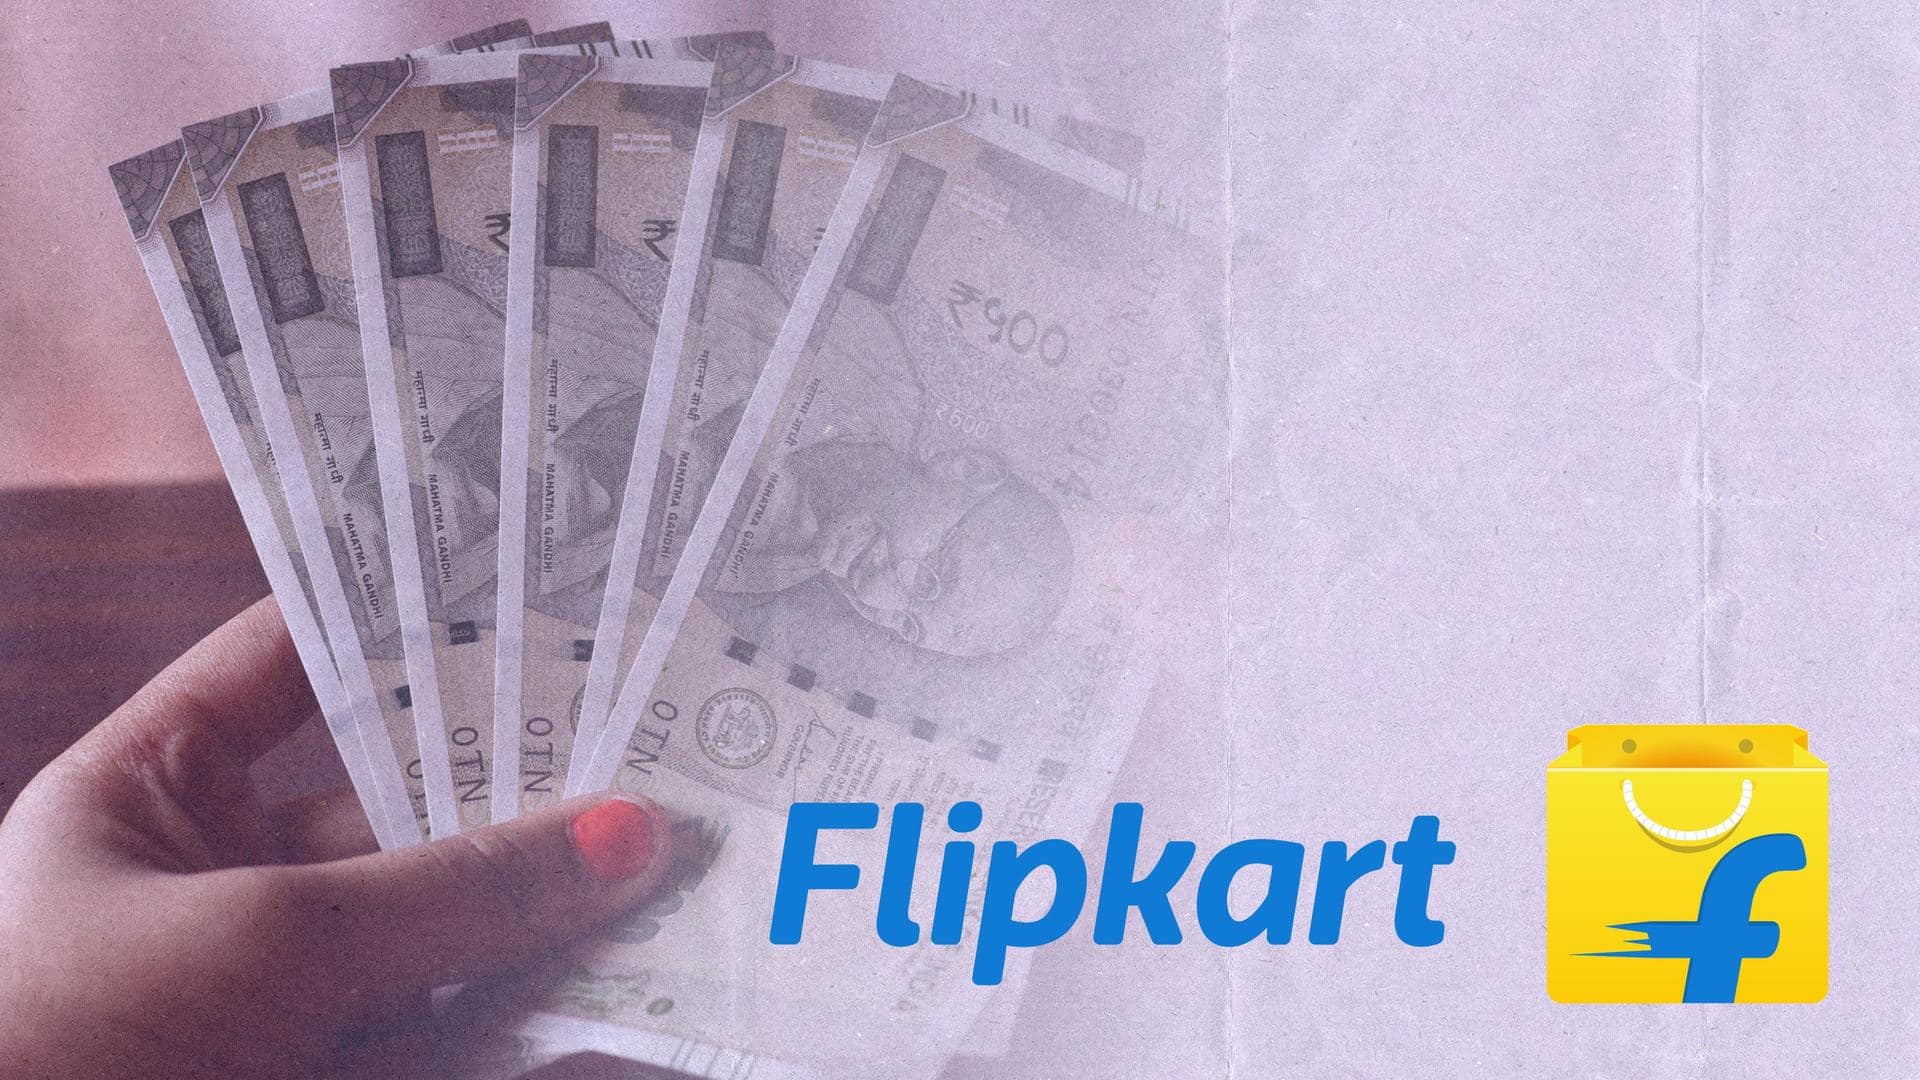 Flipkart enters personal loan business; offering Rs. 5 lakh credit